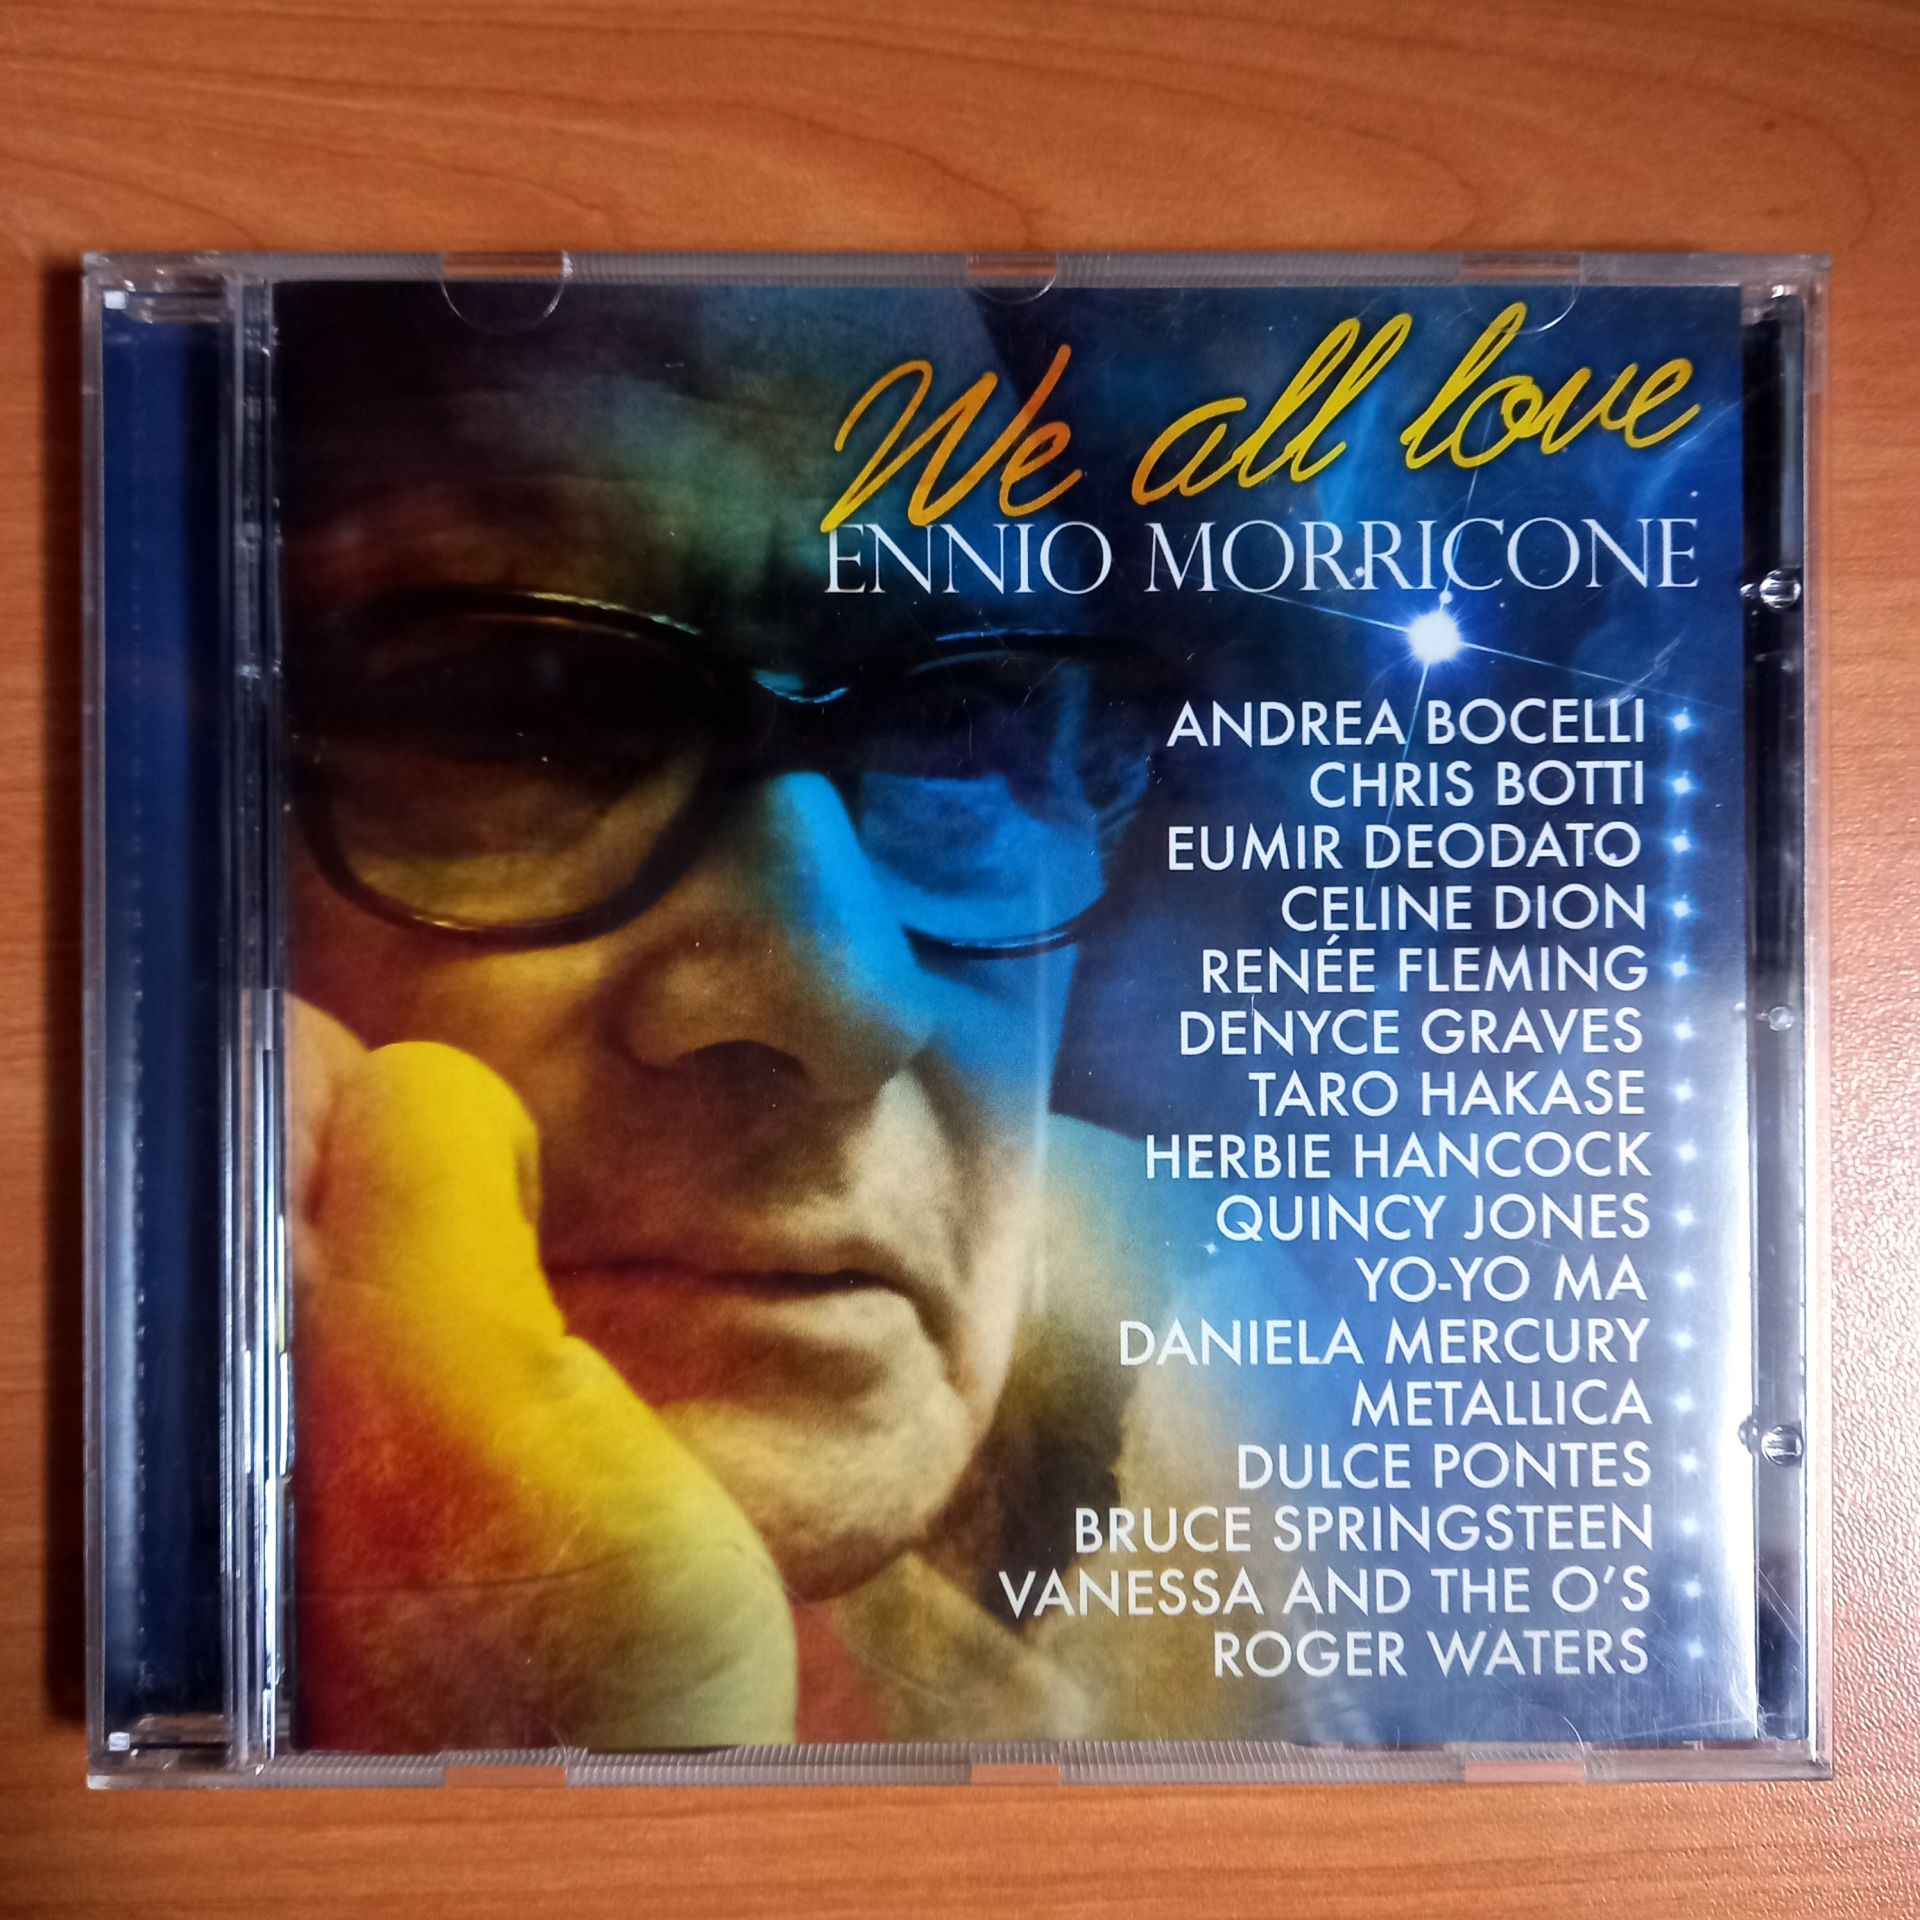 WE ALL LOVE ENNIO MORRICONE / ANDREA BOCELLI, CHRIS BOTTI, CELINE DION, HERBIE HANCOCK, YO-YO MA, METALLICA, BRUCE SPRINGSTEEN, ROGER WATERS (2007) - CD 2.EL